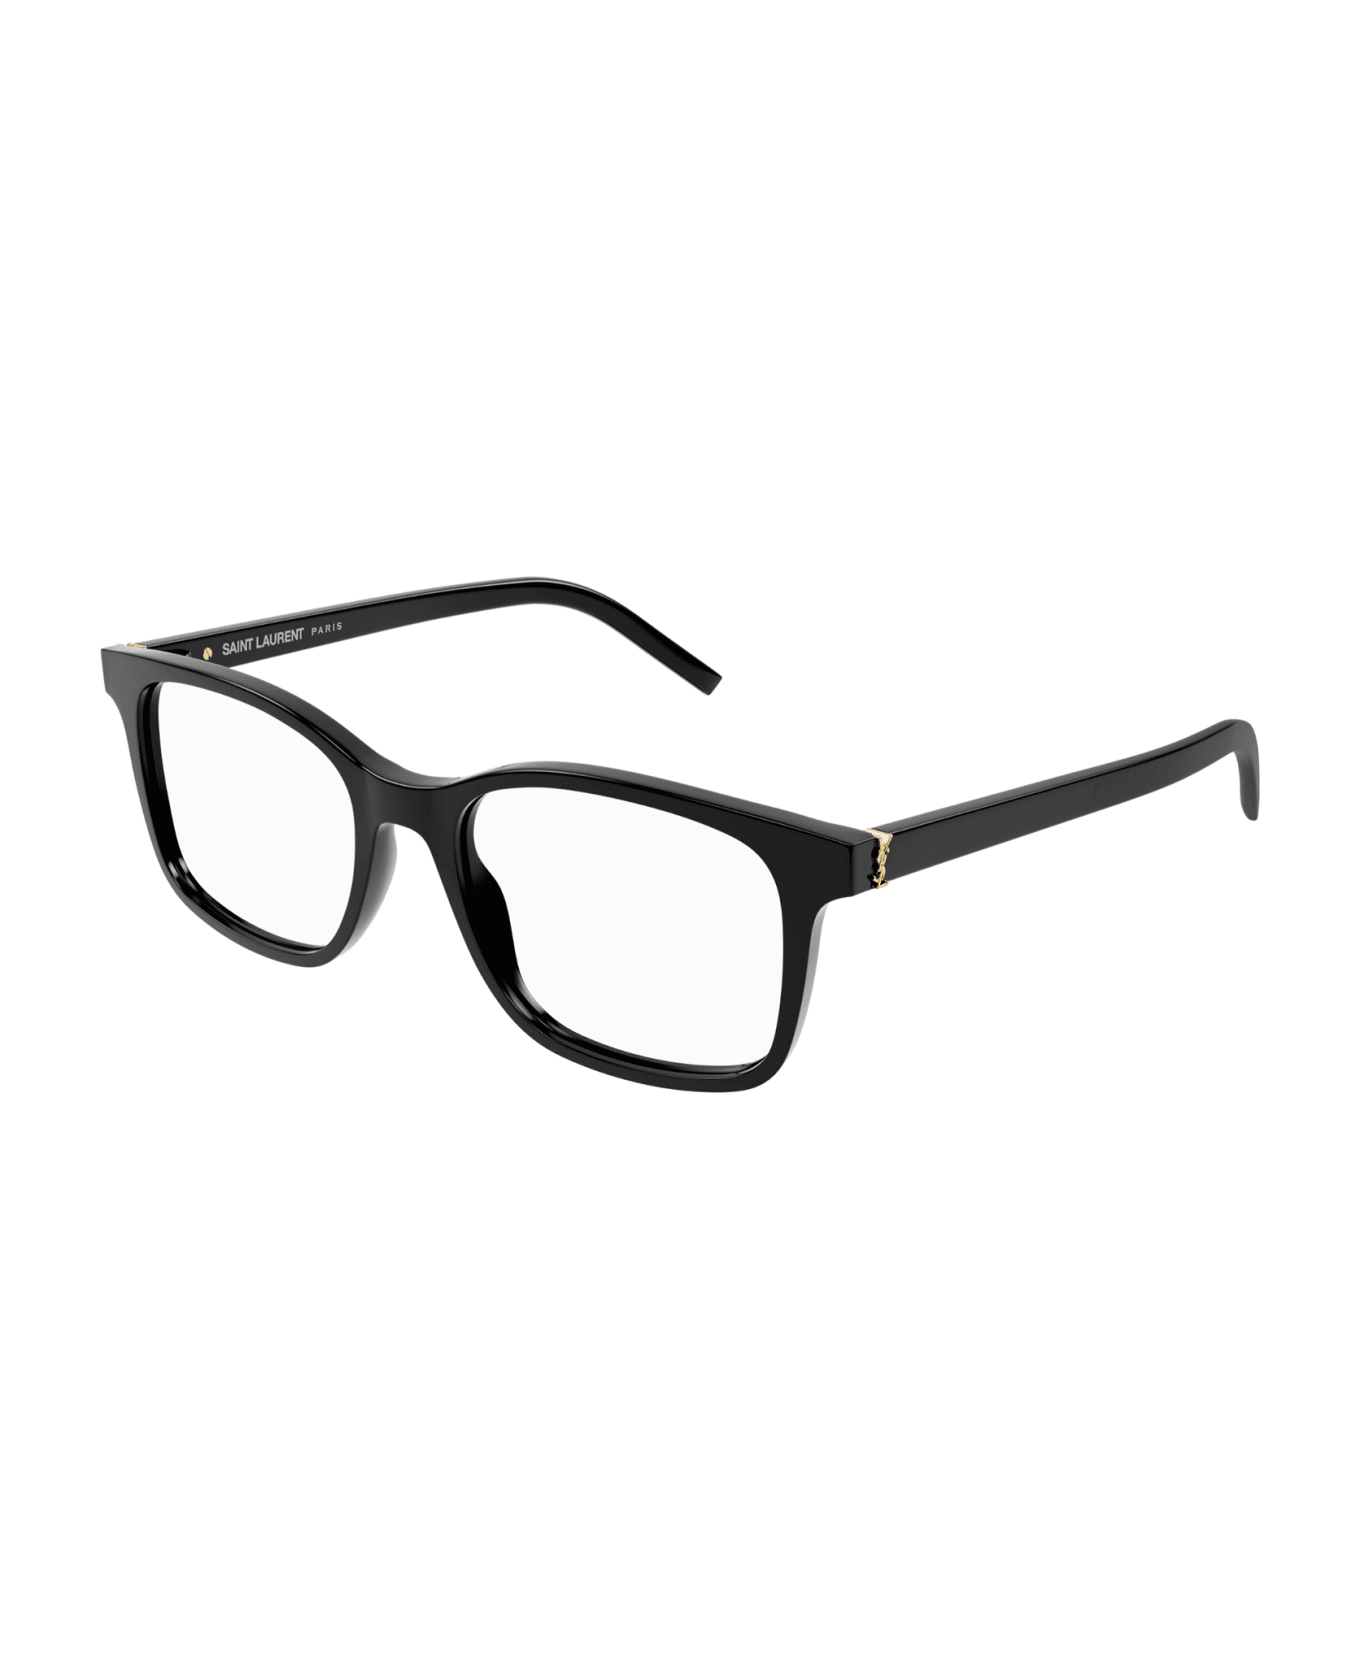 Saint Laurent Eyewear SL M120 Eyewear - Black Black Transpare アイウェア